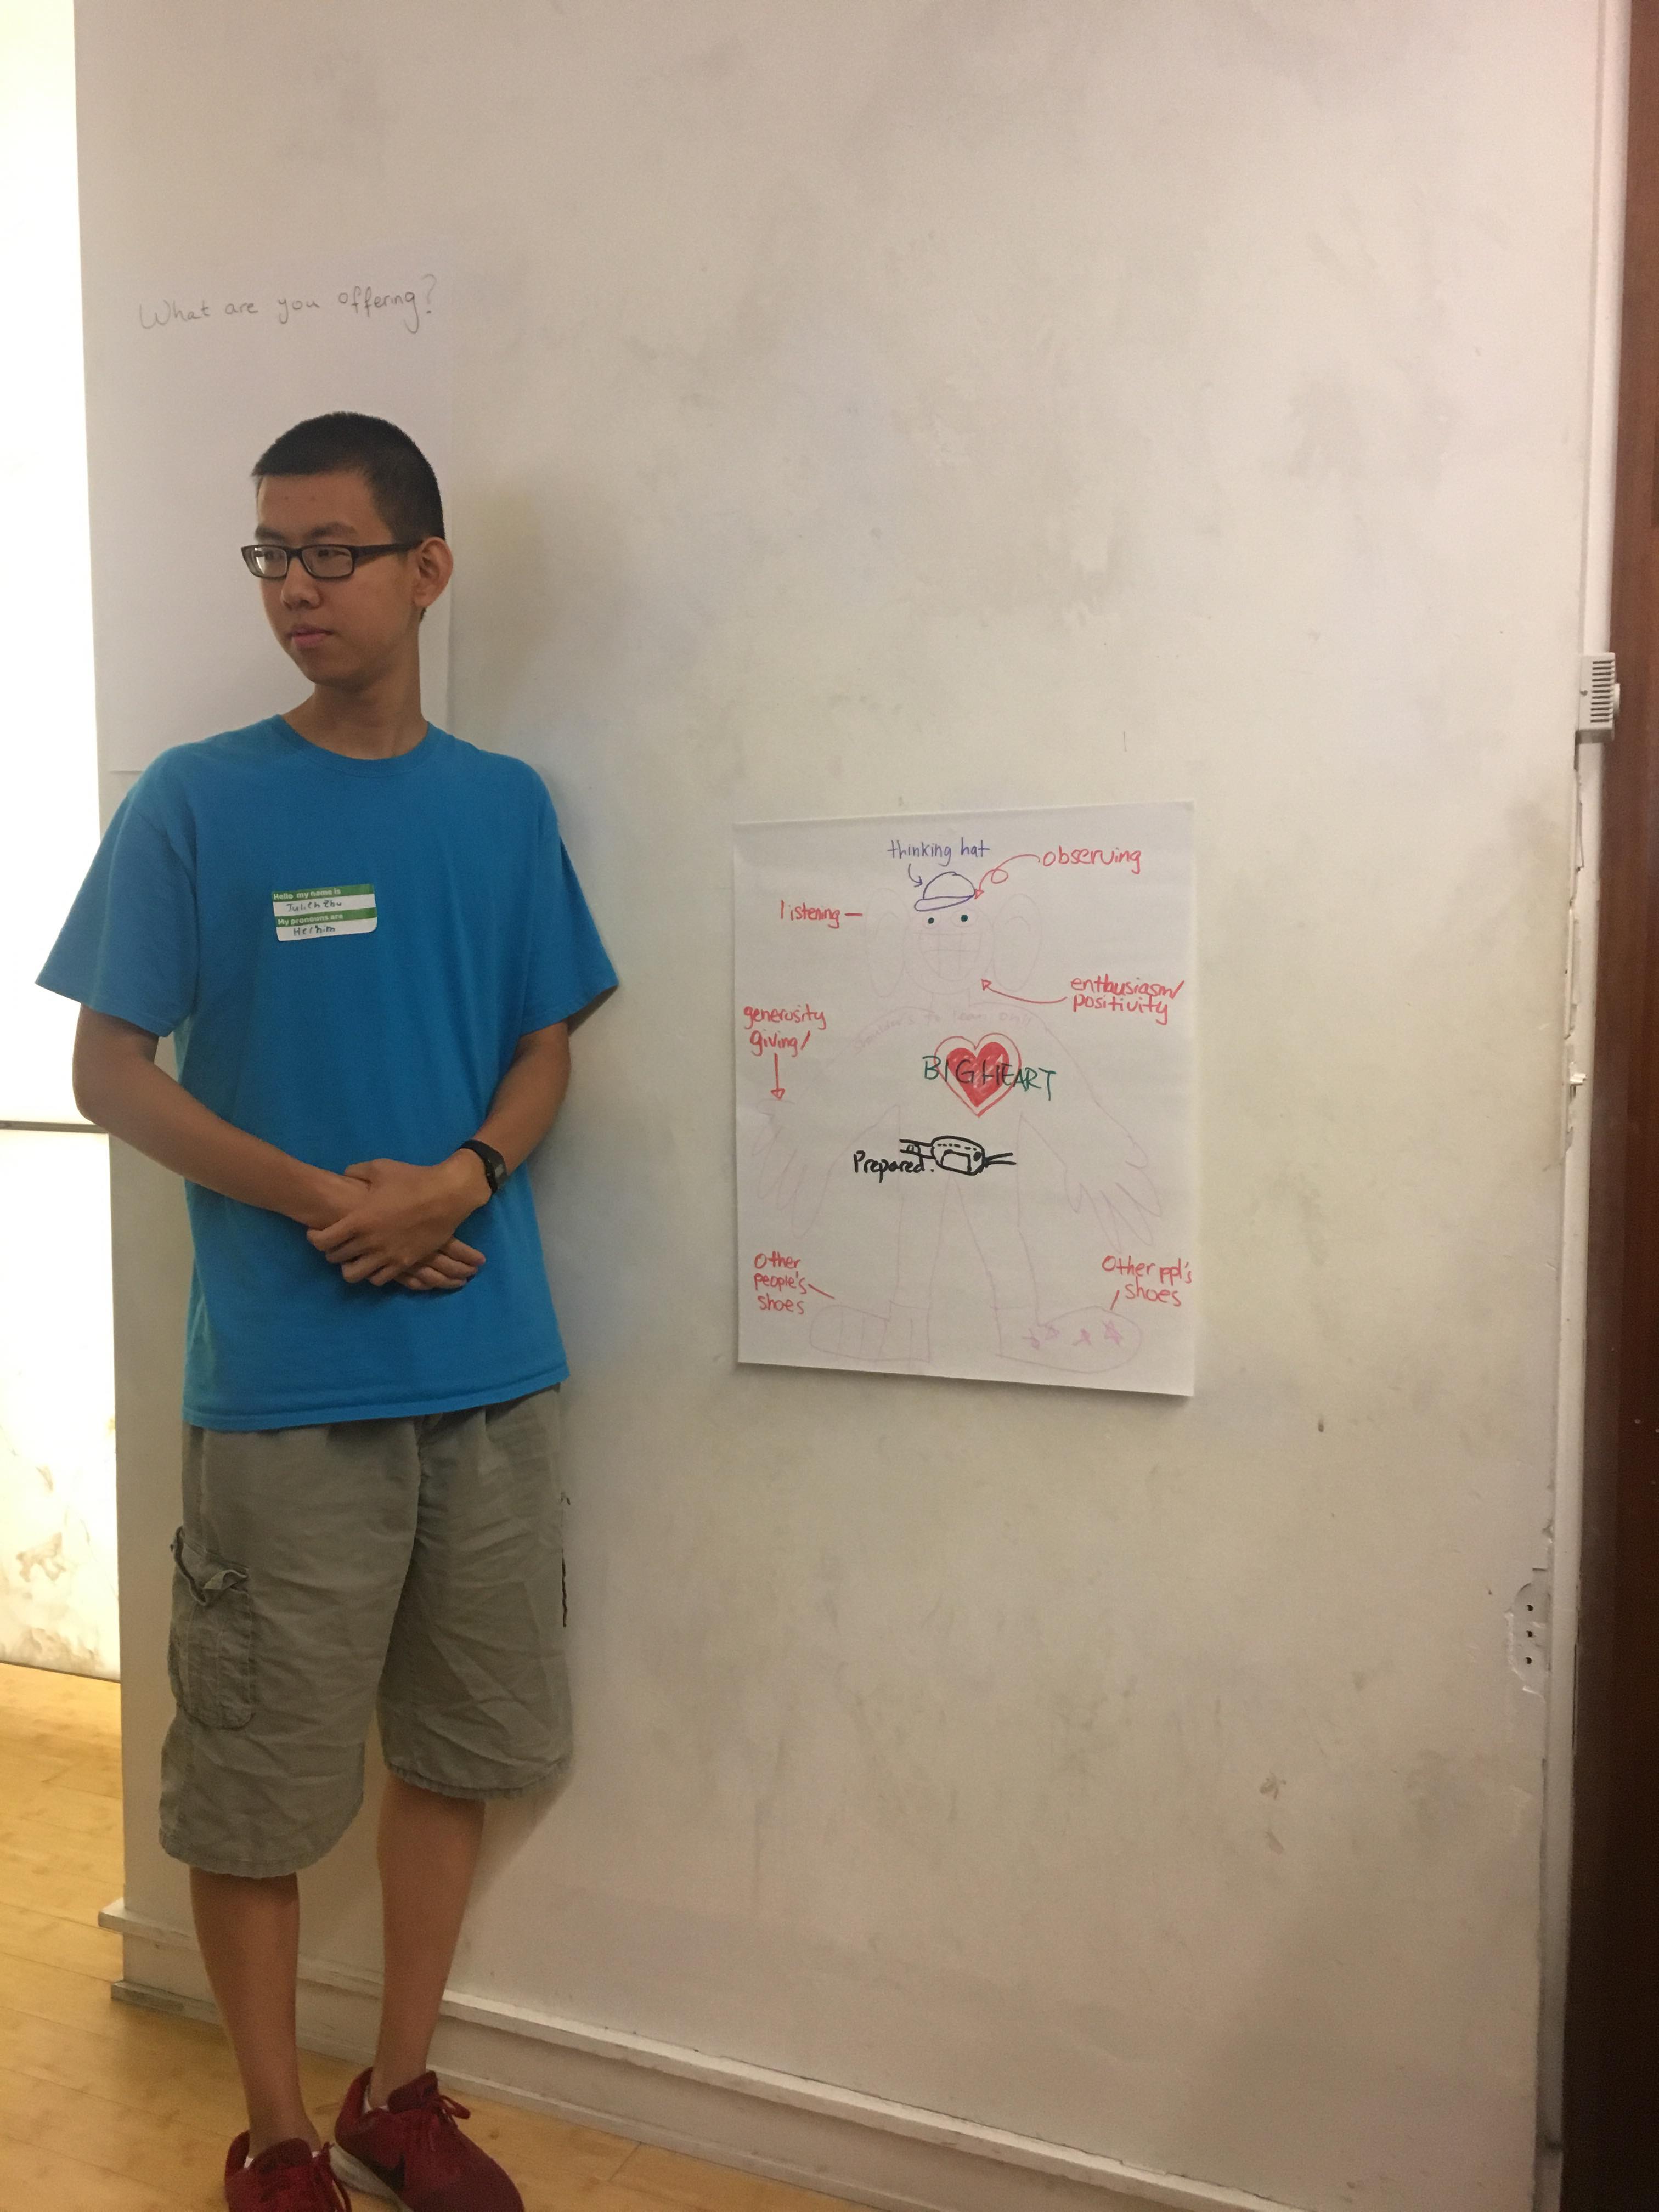 Project leader orientation presentation